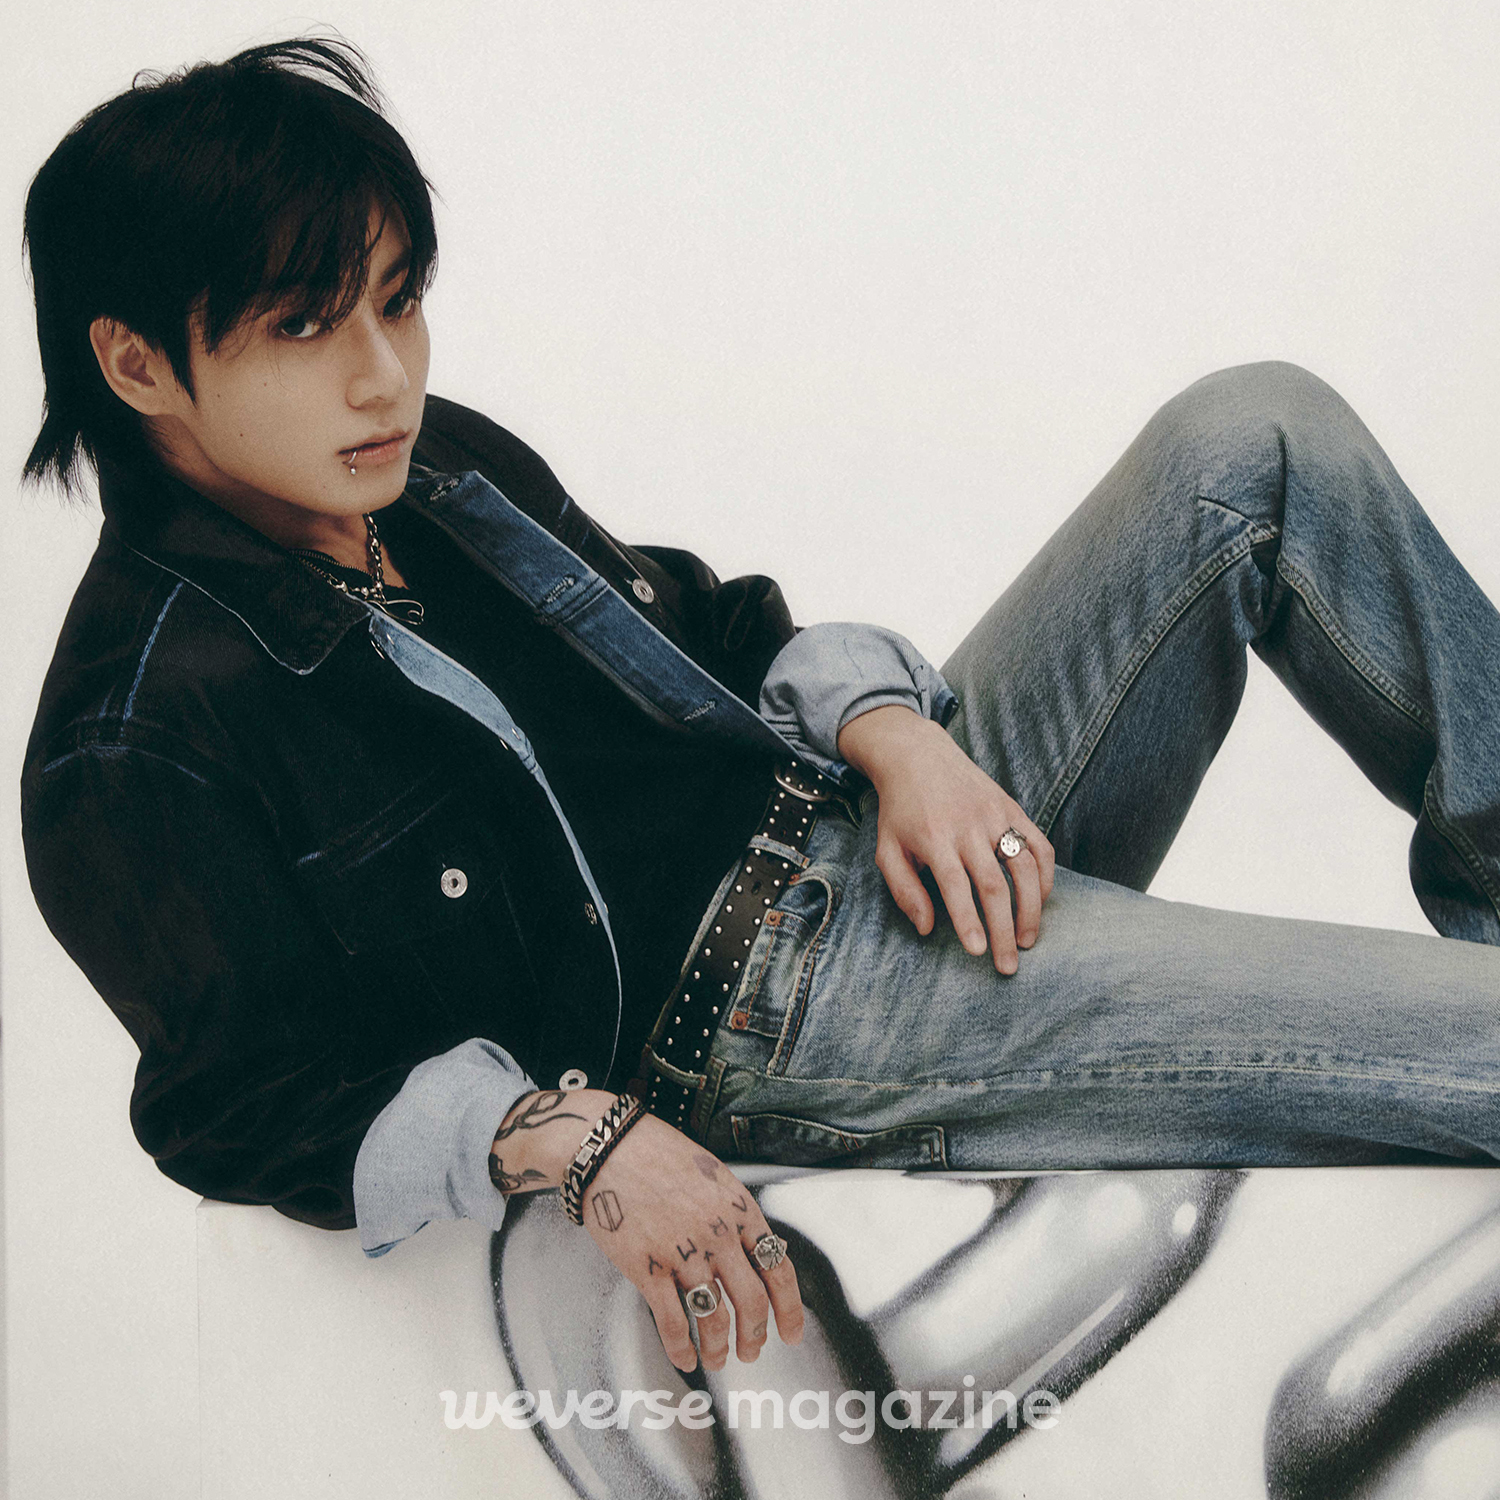 [Magazine] Jung Kook: universal pop star